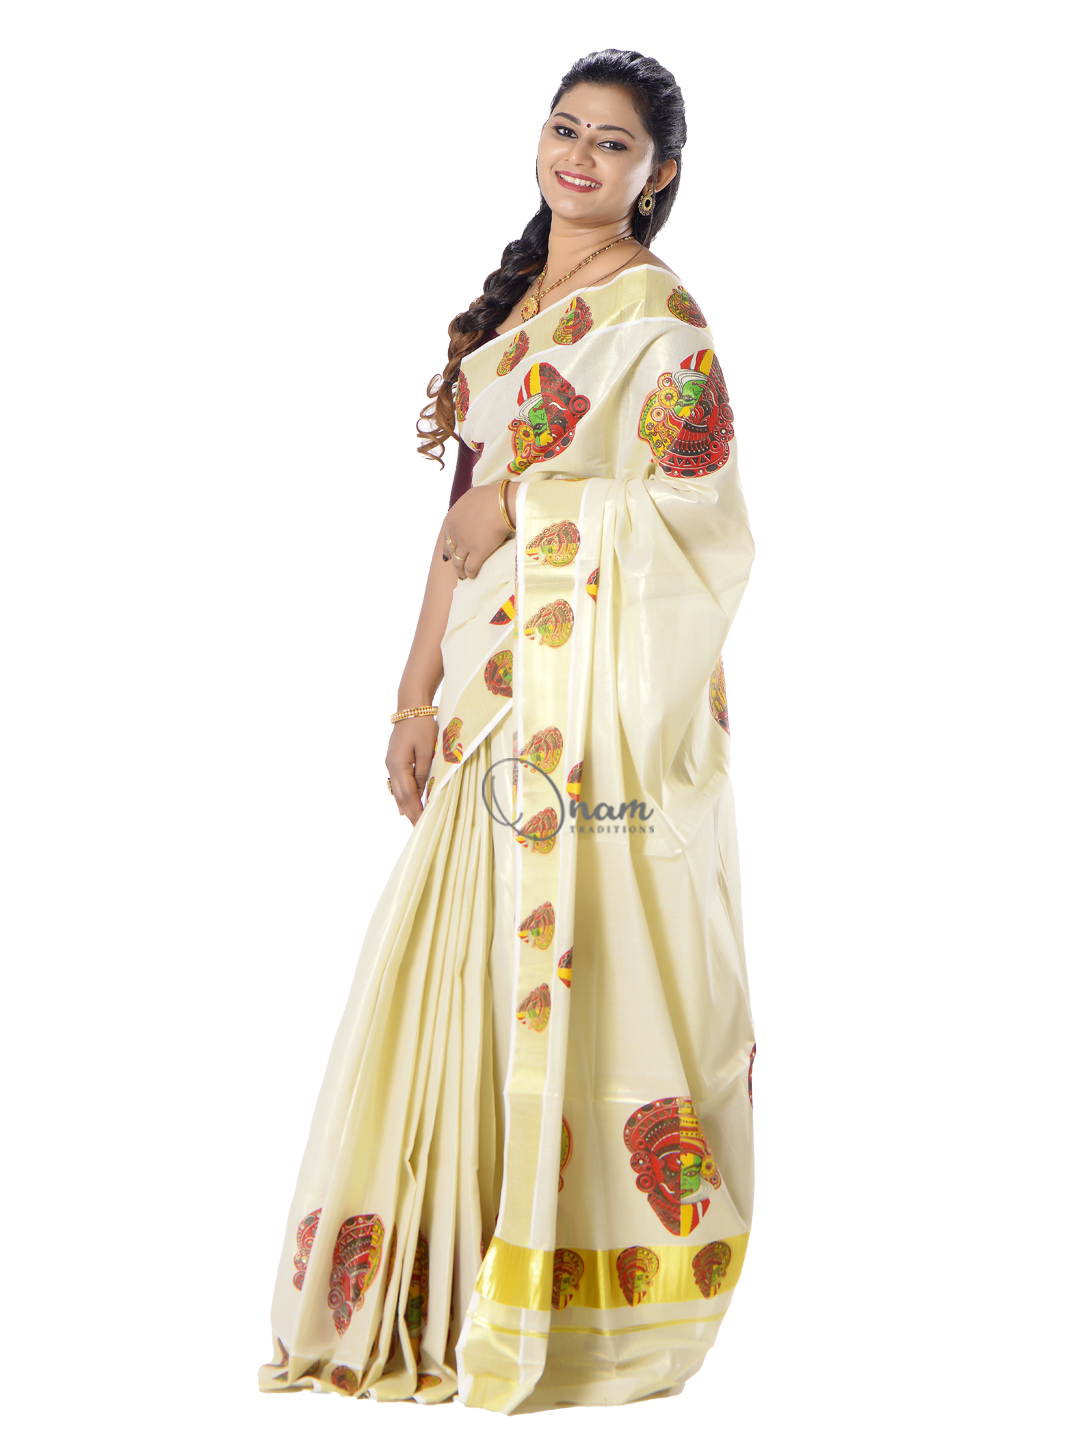 Latest Glamour of Beauty Kerala Set Saree Blouse Designs - Shahi Fits